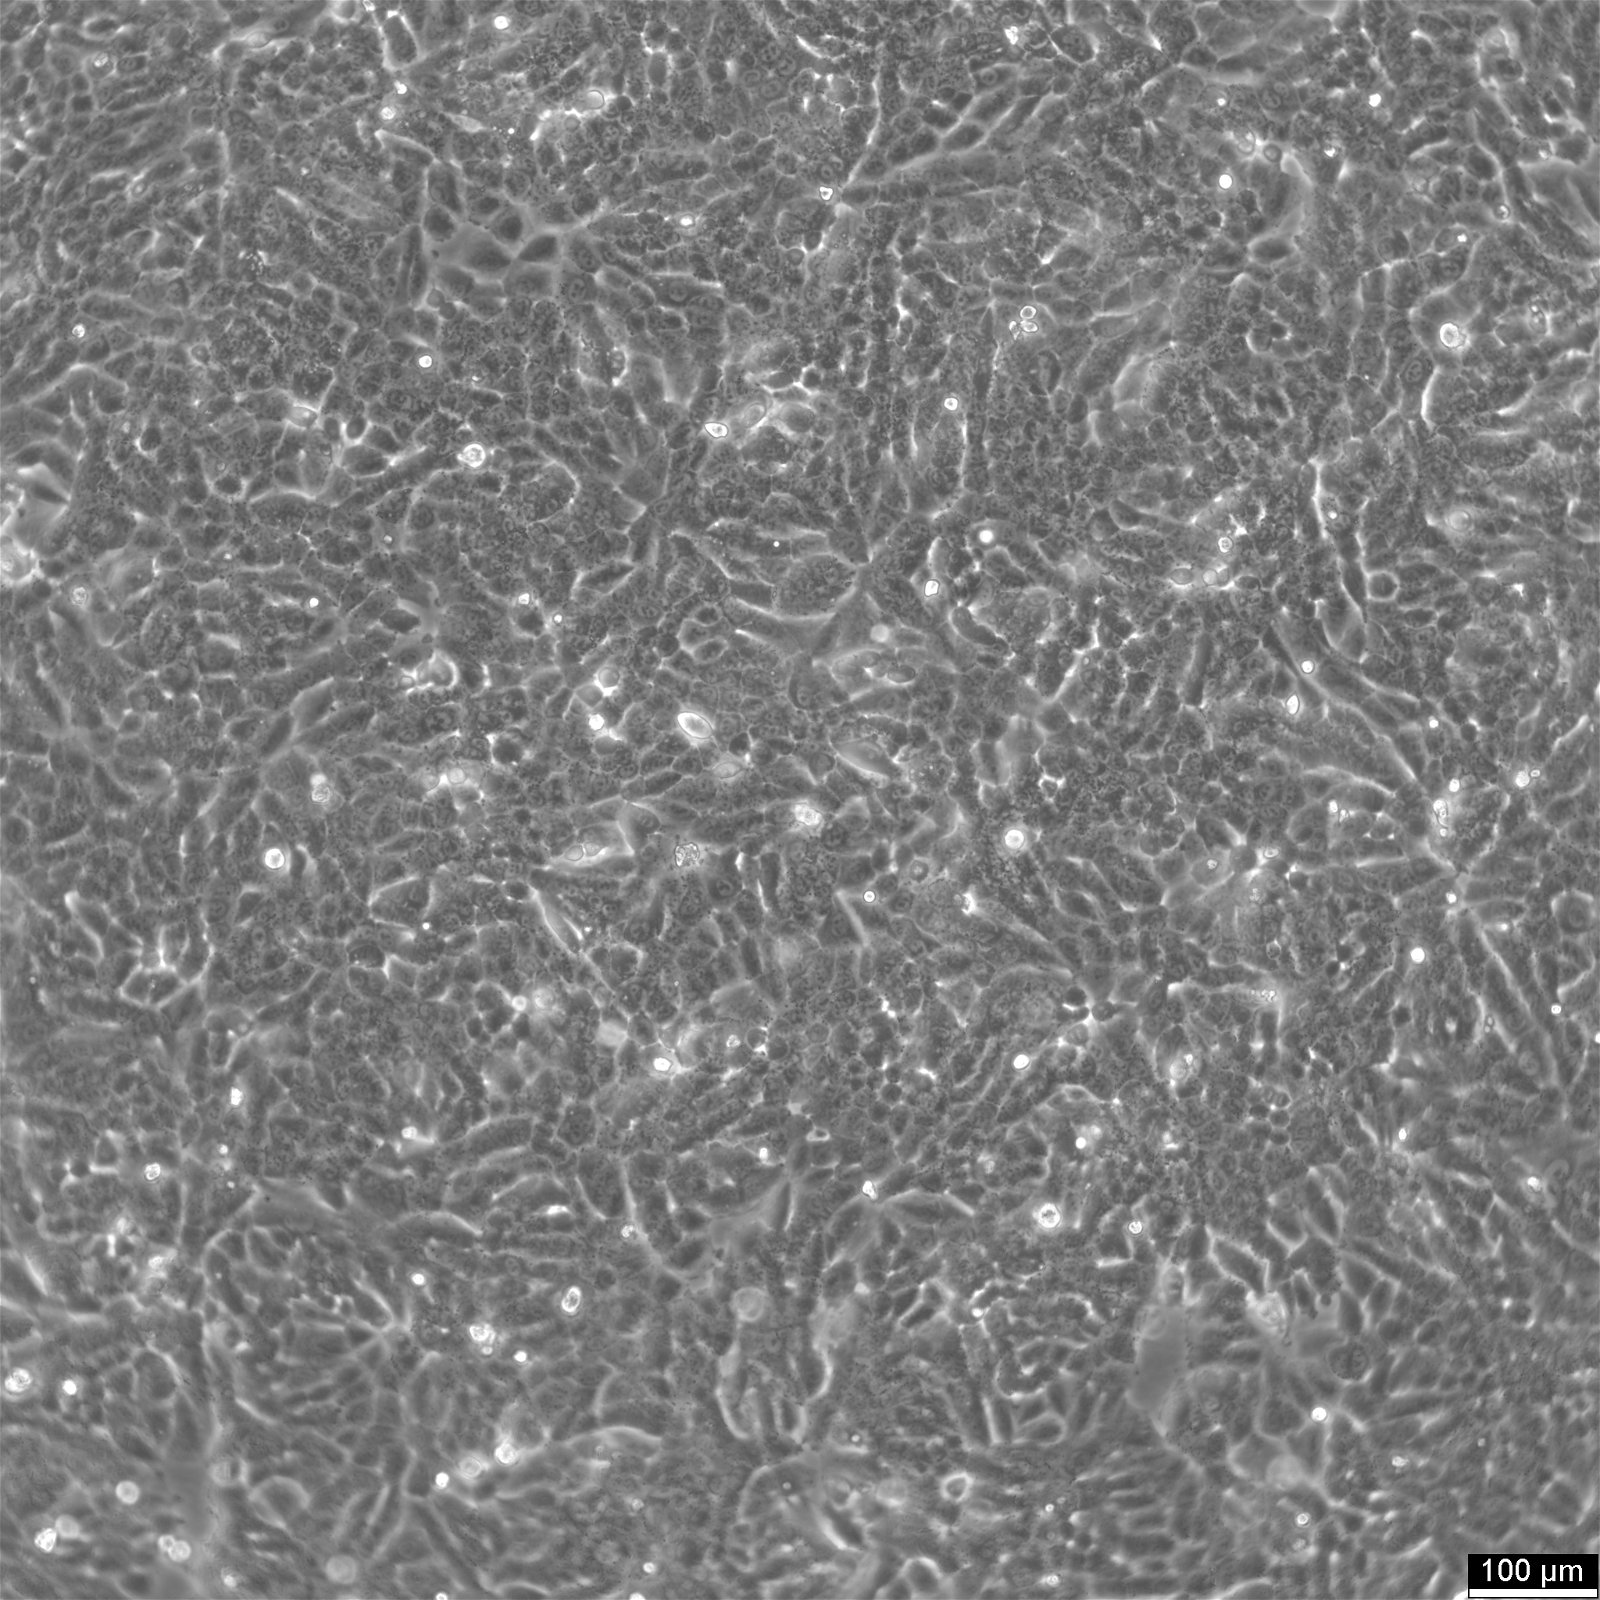 NCI-H460 Cells